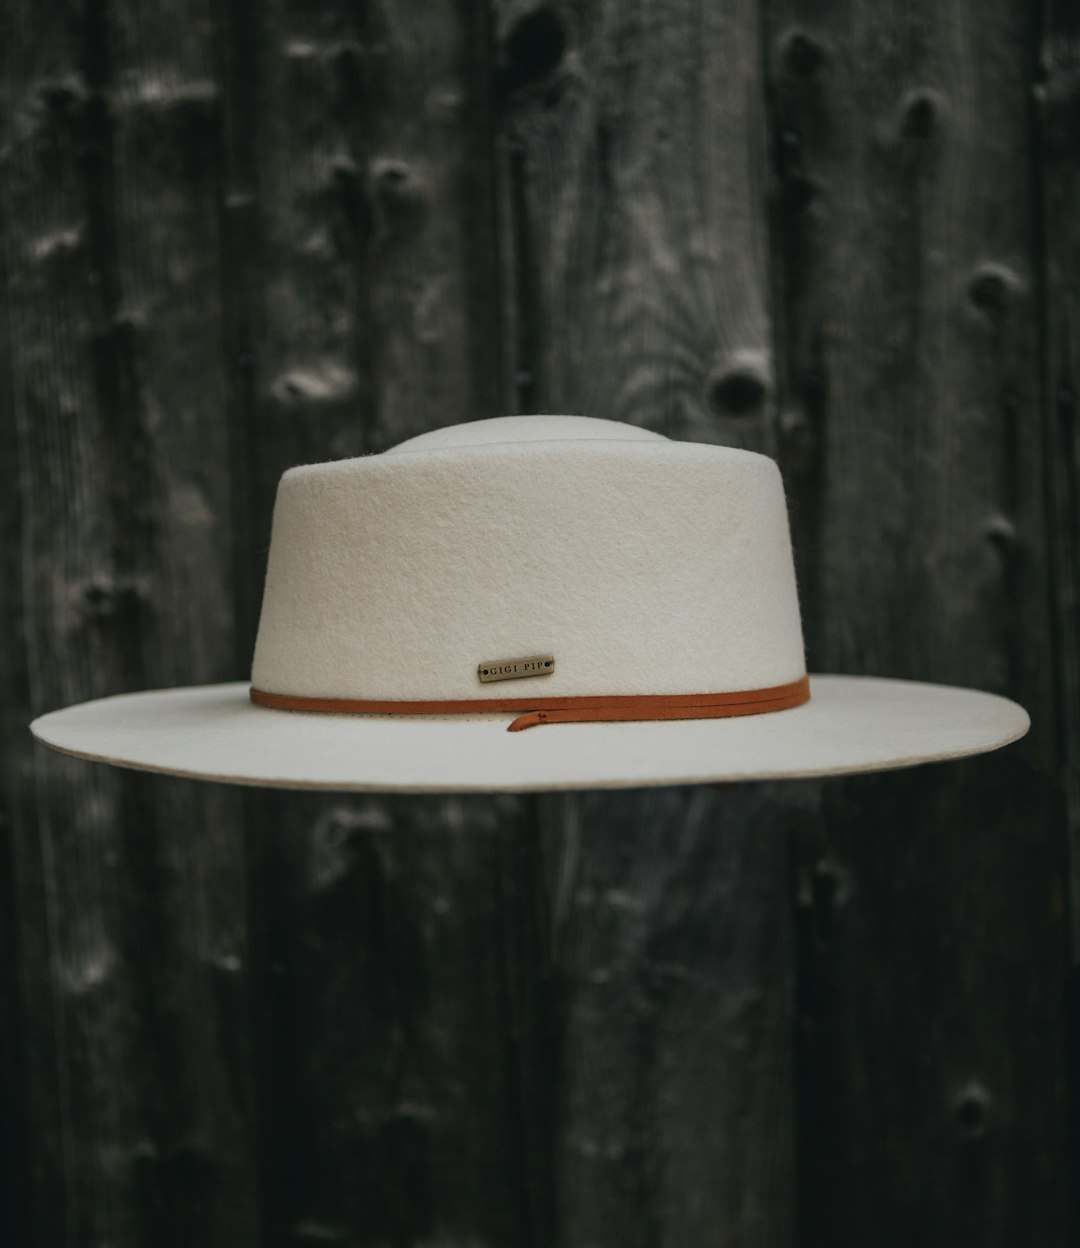 white fedora hat on black wooden surface